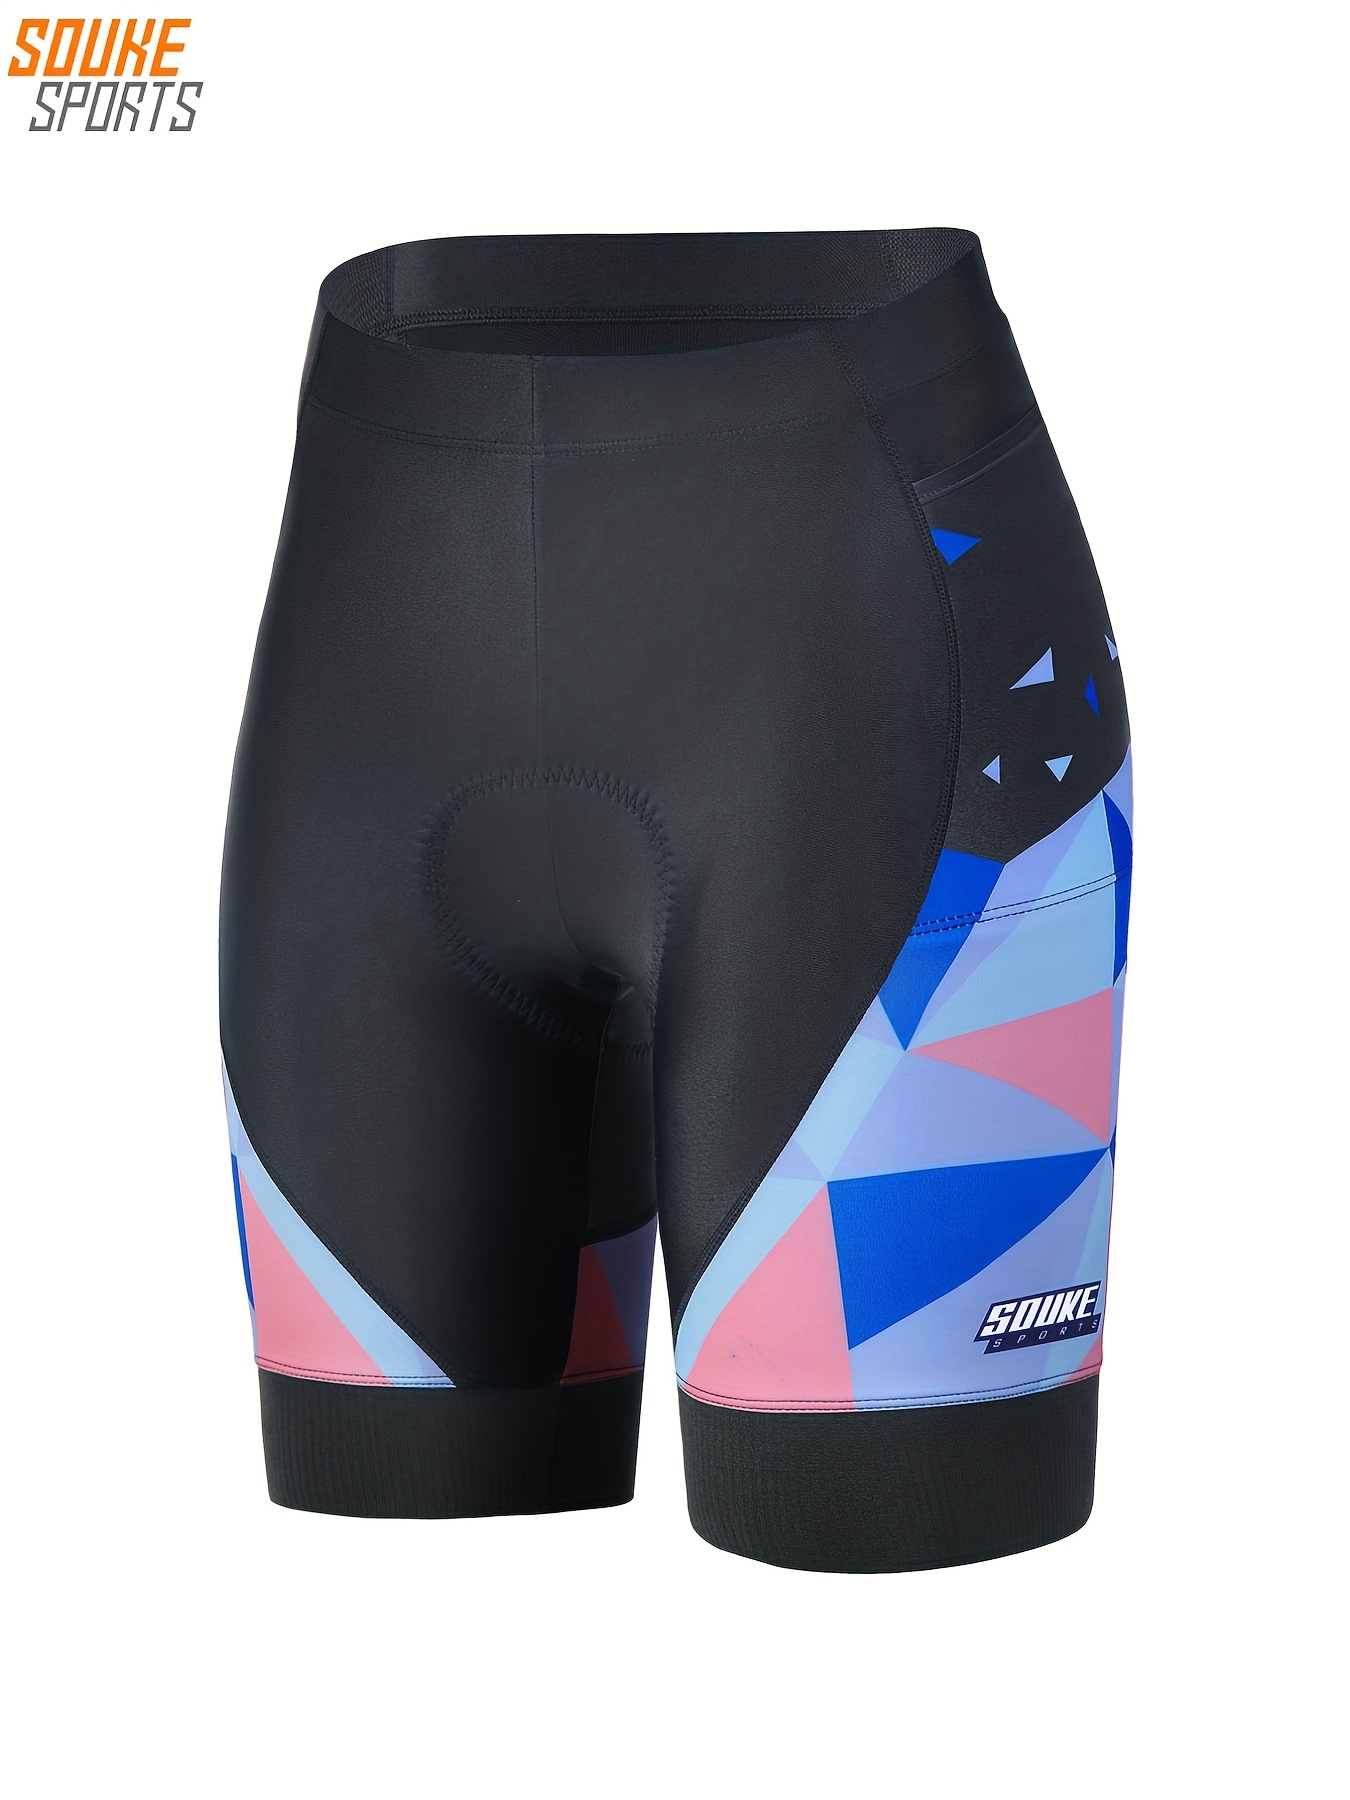 Cathalem Cycling Shorts for Women Padded Fashion Pants Sports